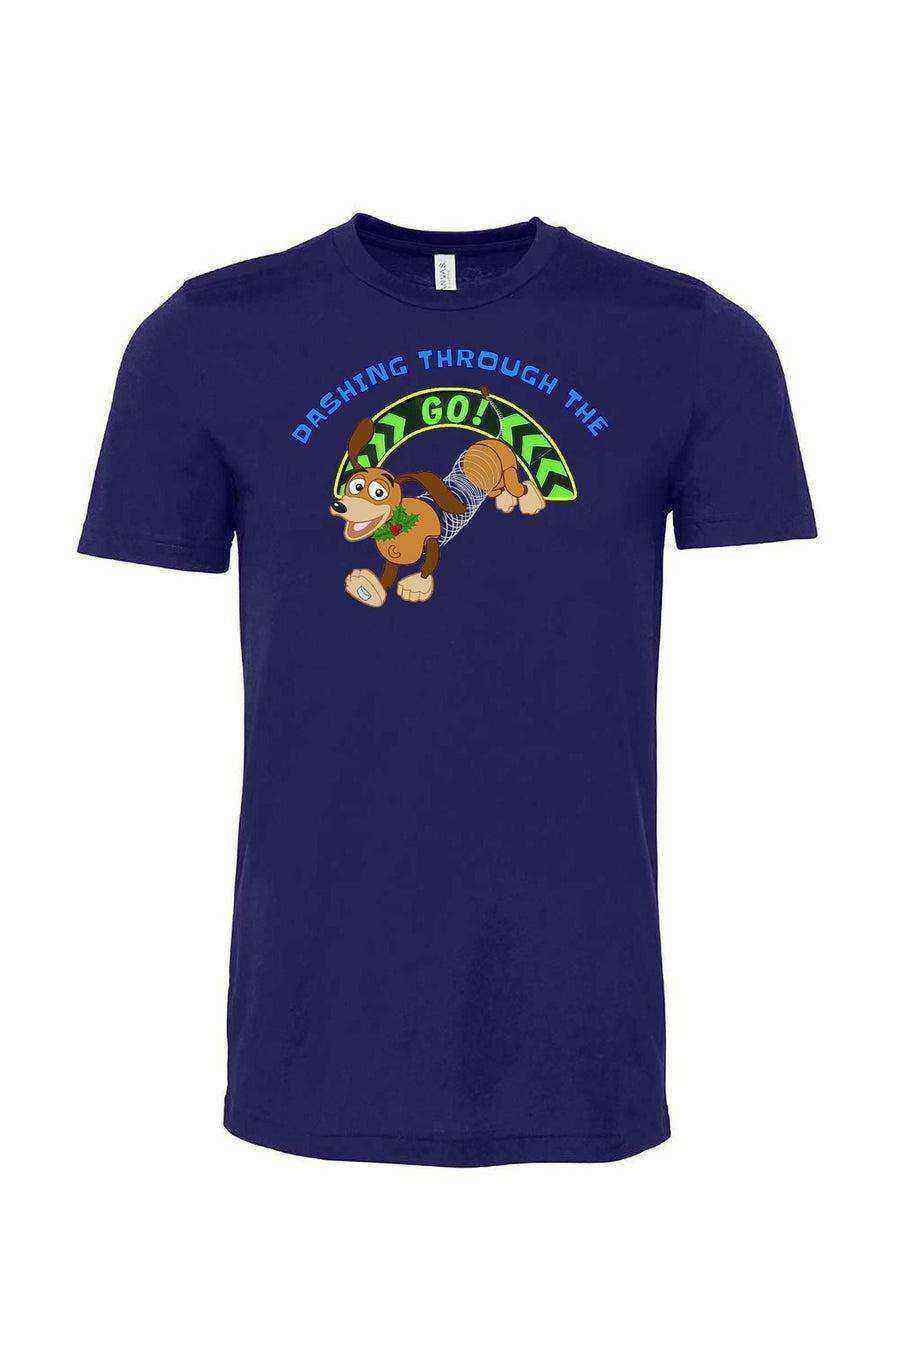 Dashing Through The Go Shirt | Toy Story Christmas Shirt - Dylan's Tees